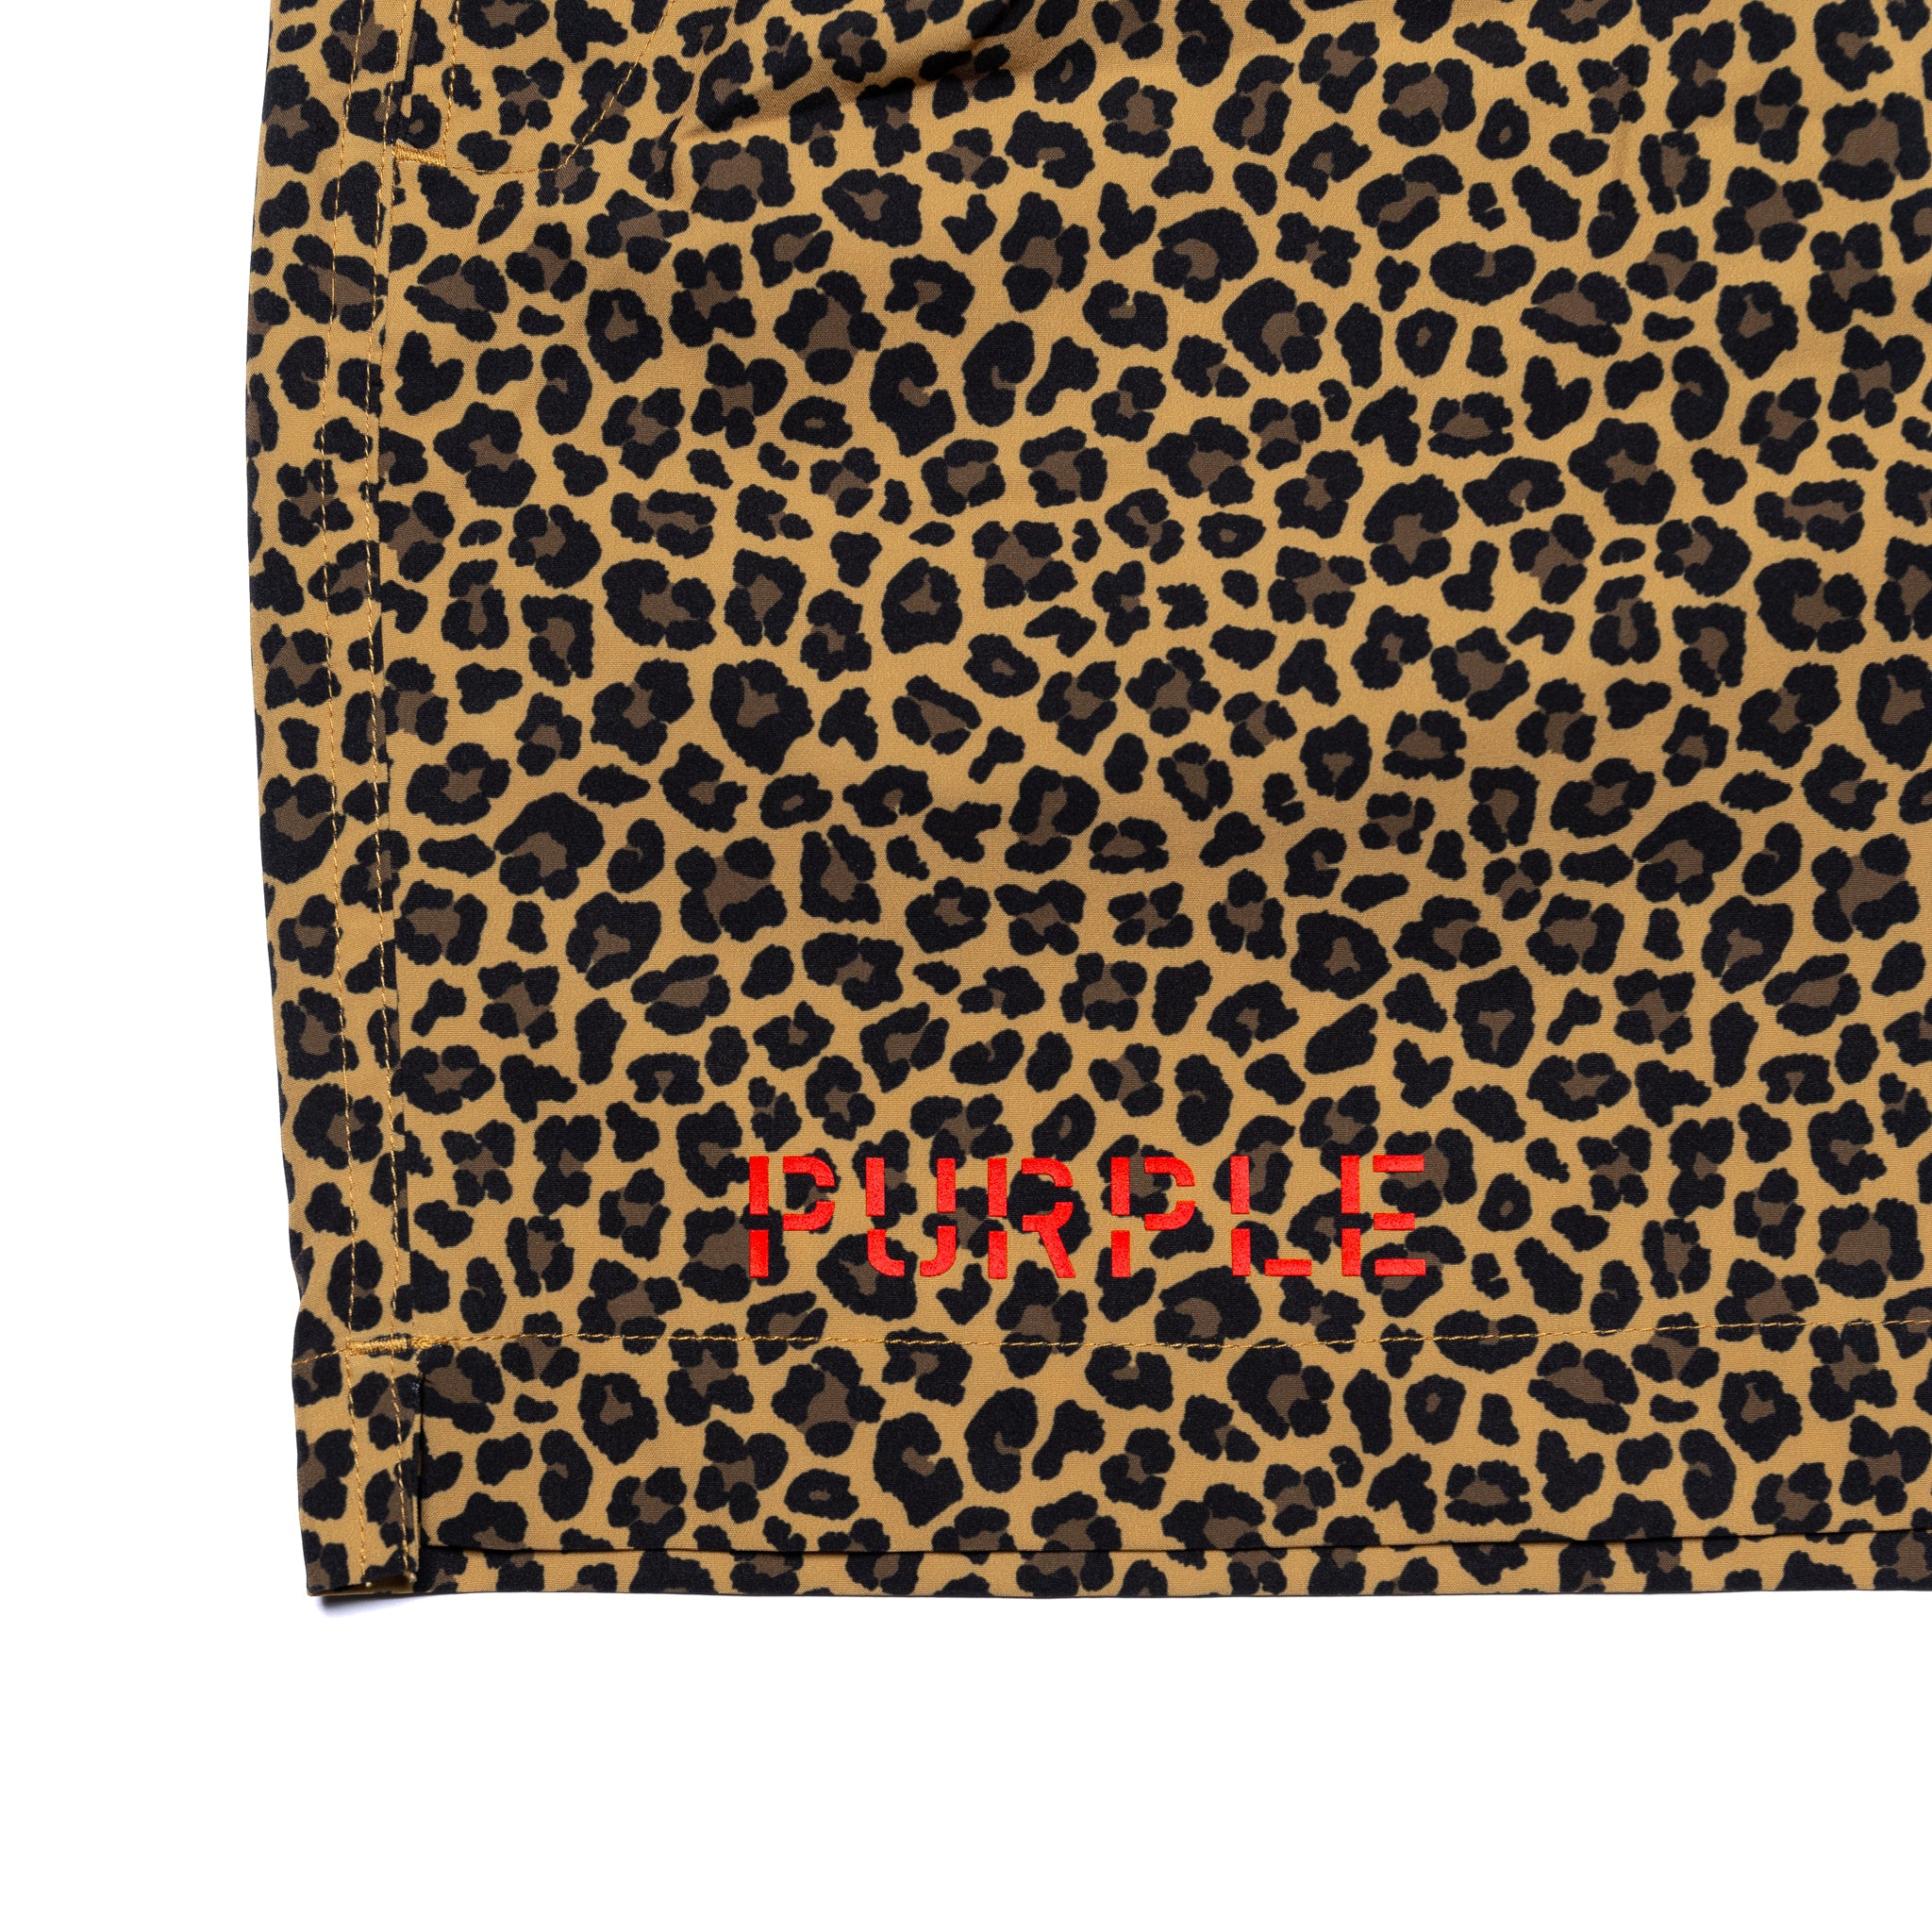 Purple Brand Leopard Print Logo Swim Shorts